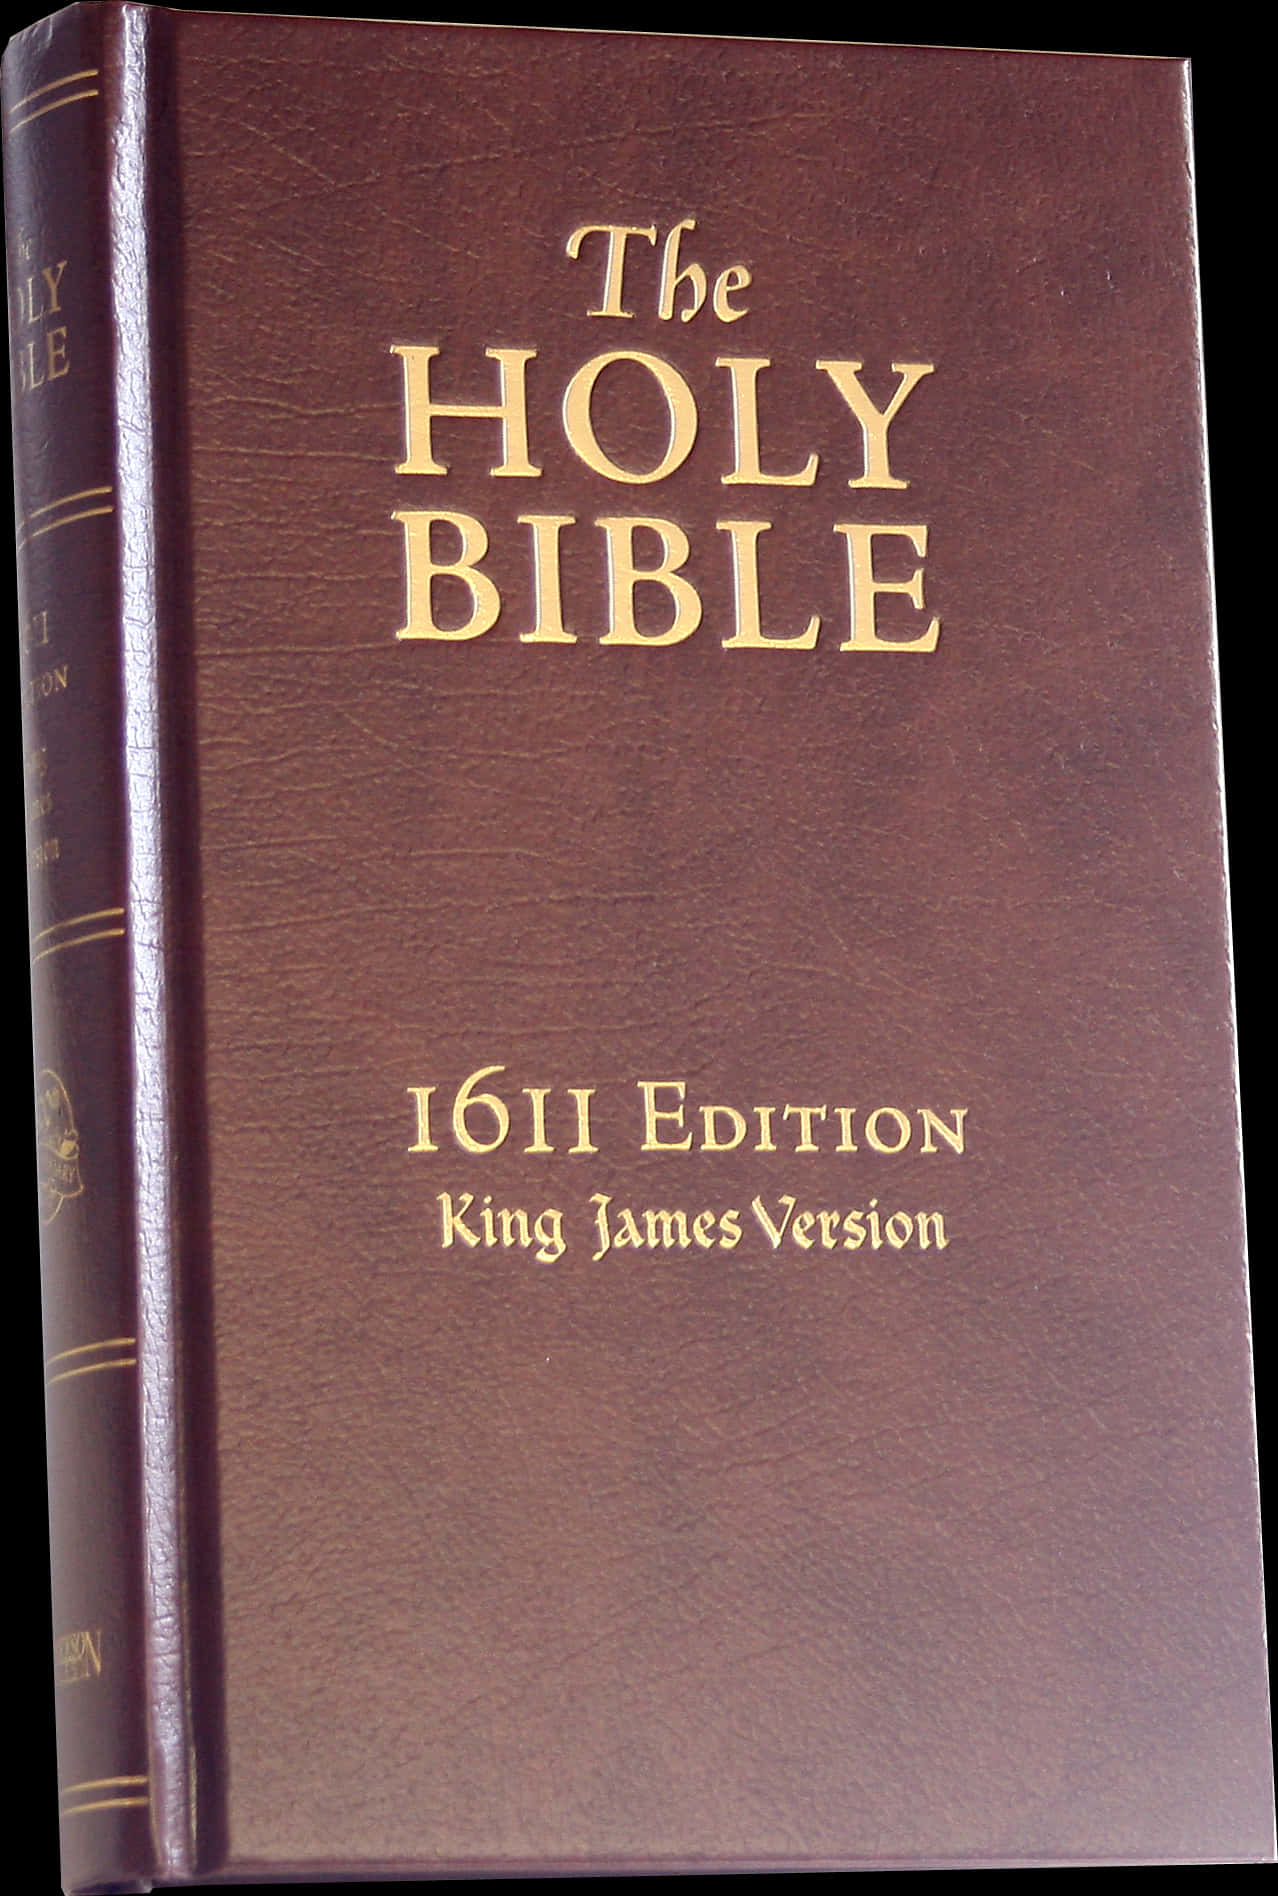 The King James Bible Wallpaper